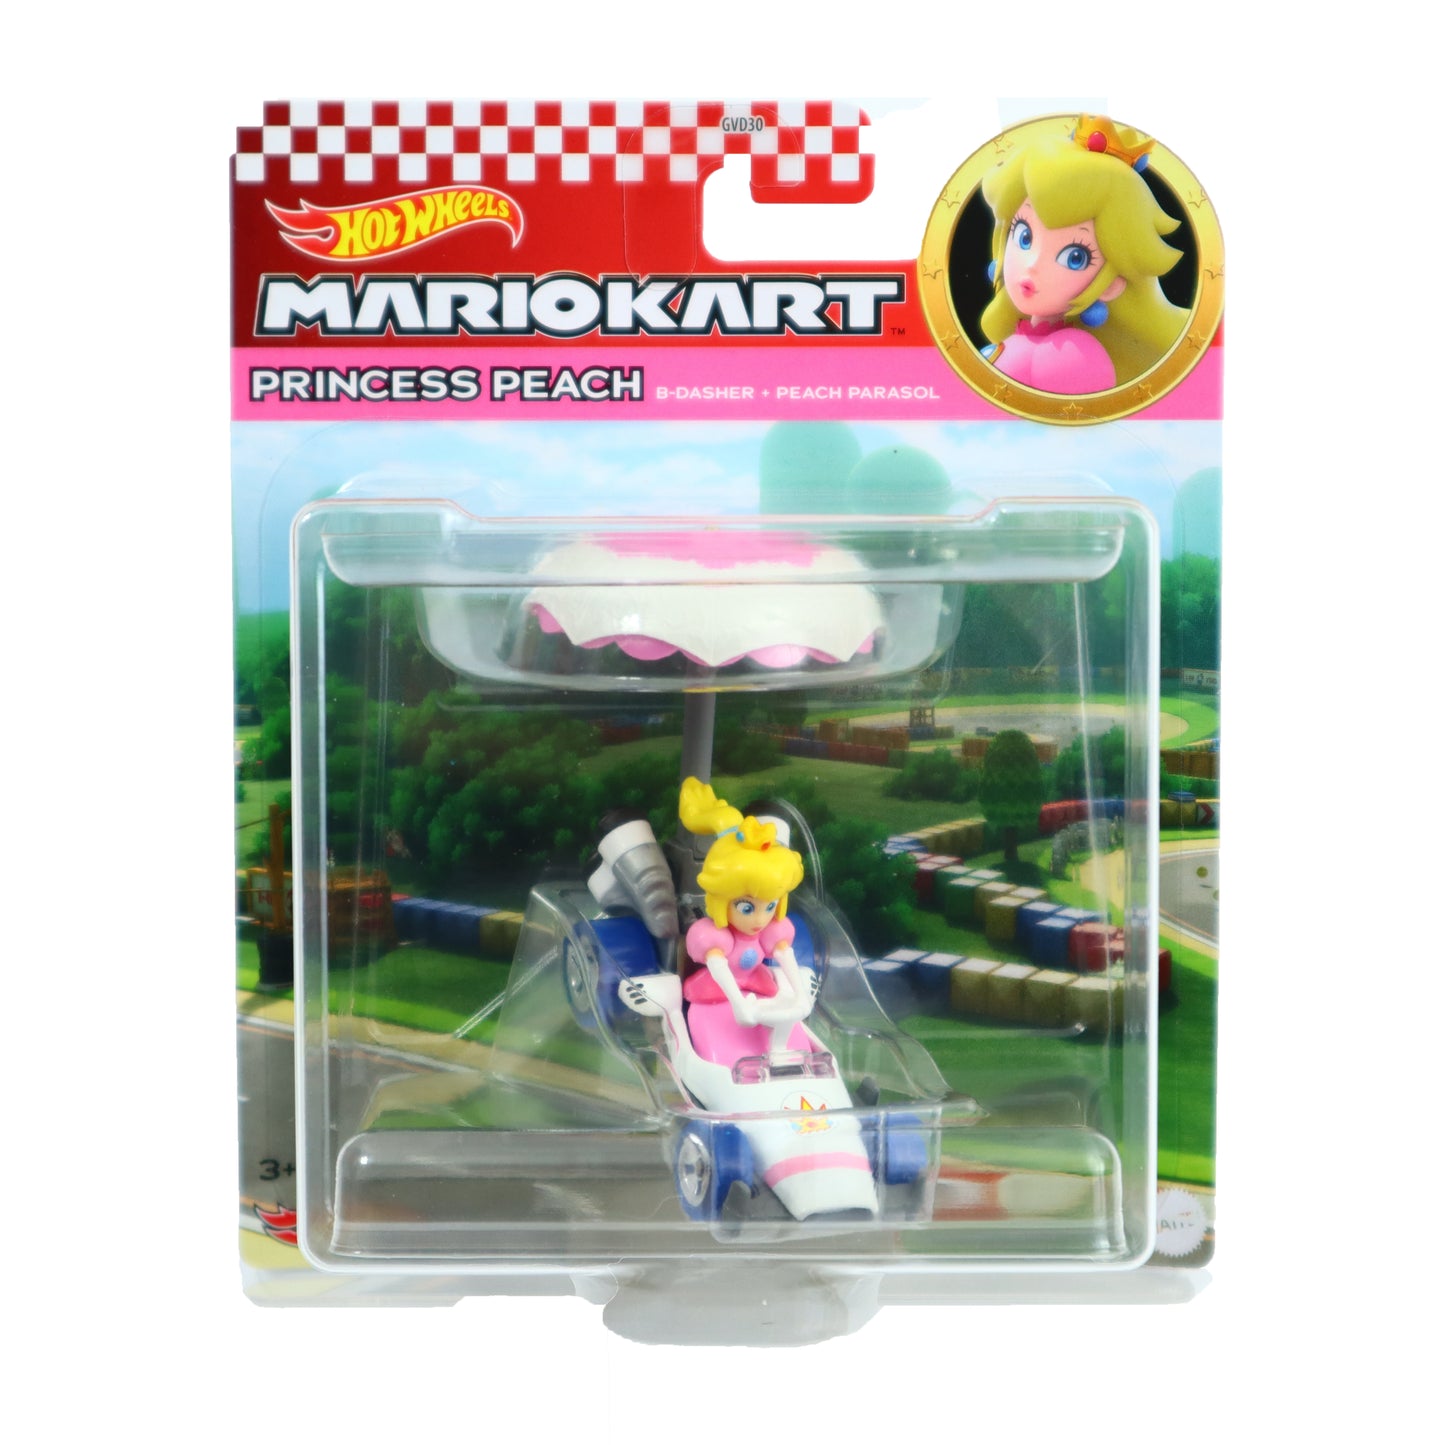 Hot Wheels Mario Kart Cars: Princess Peach Nintendo Glider Edition: Pink & White: 1:64 Scale